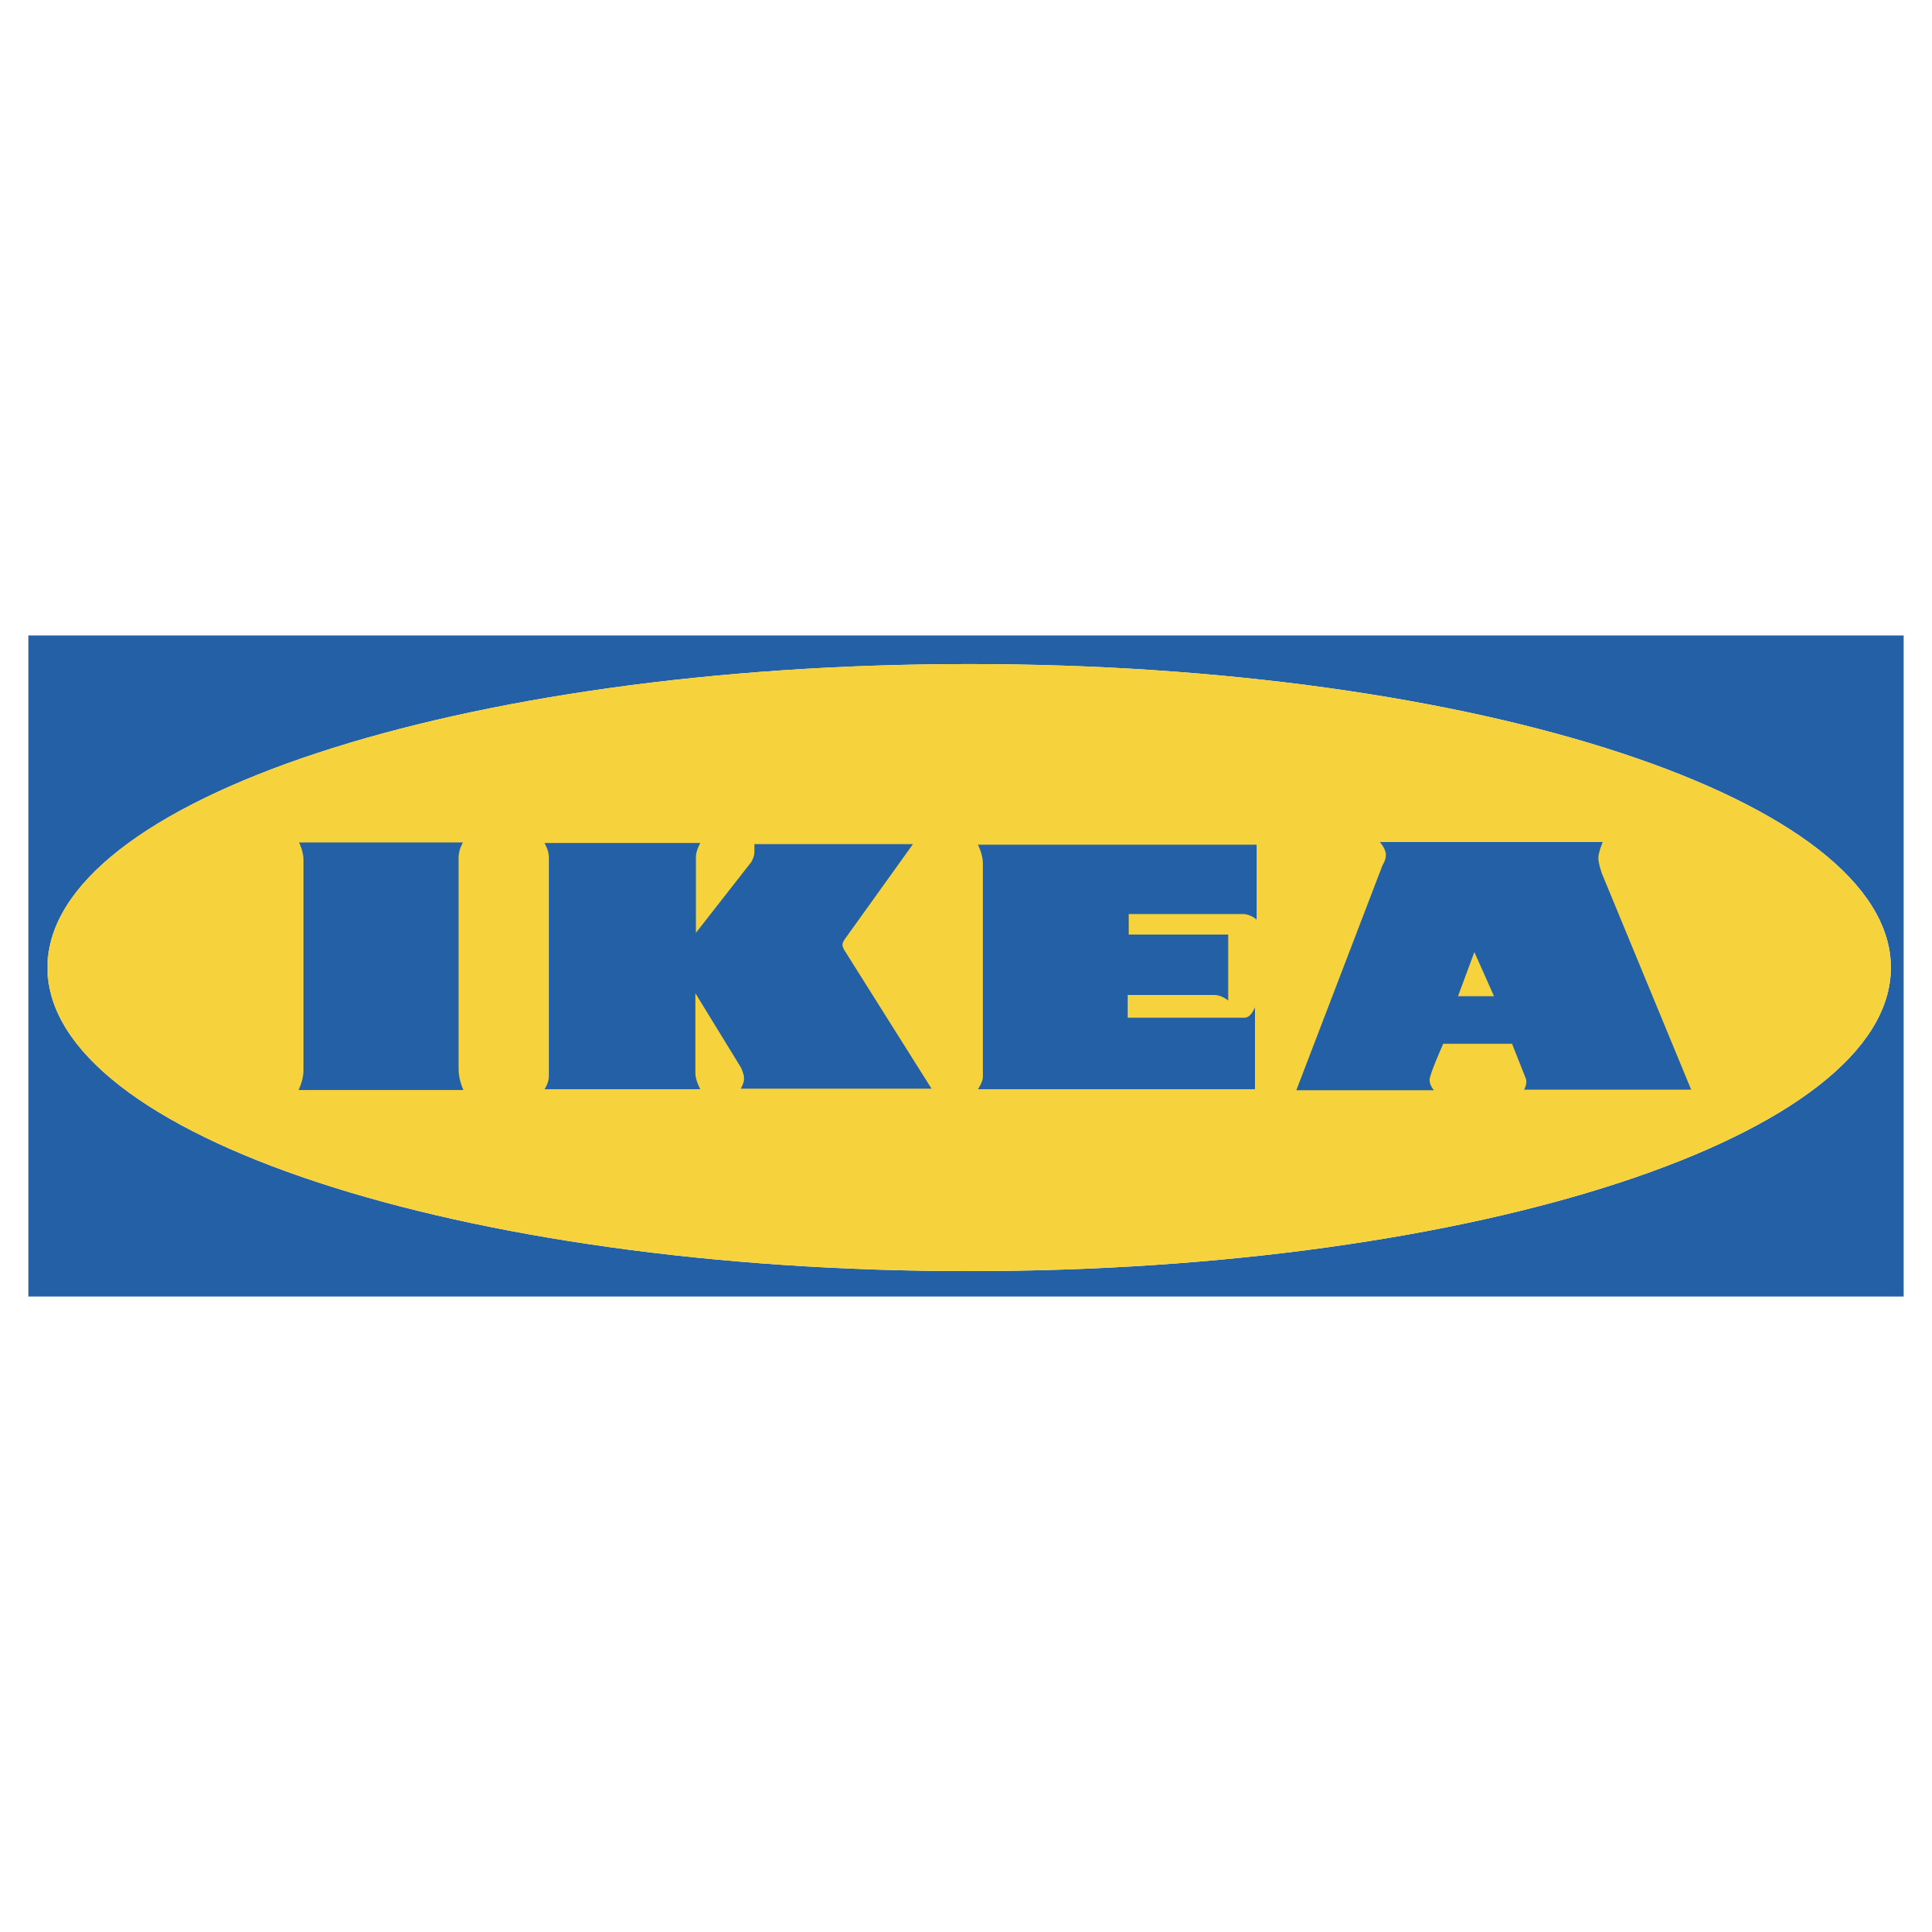 Ikea Logo Hd, Roblox - Logo I